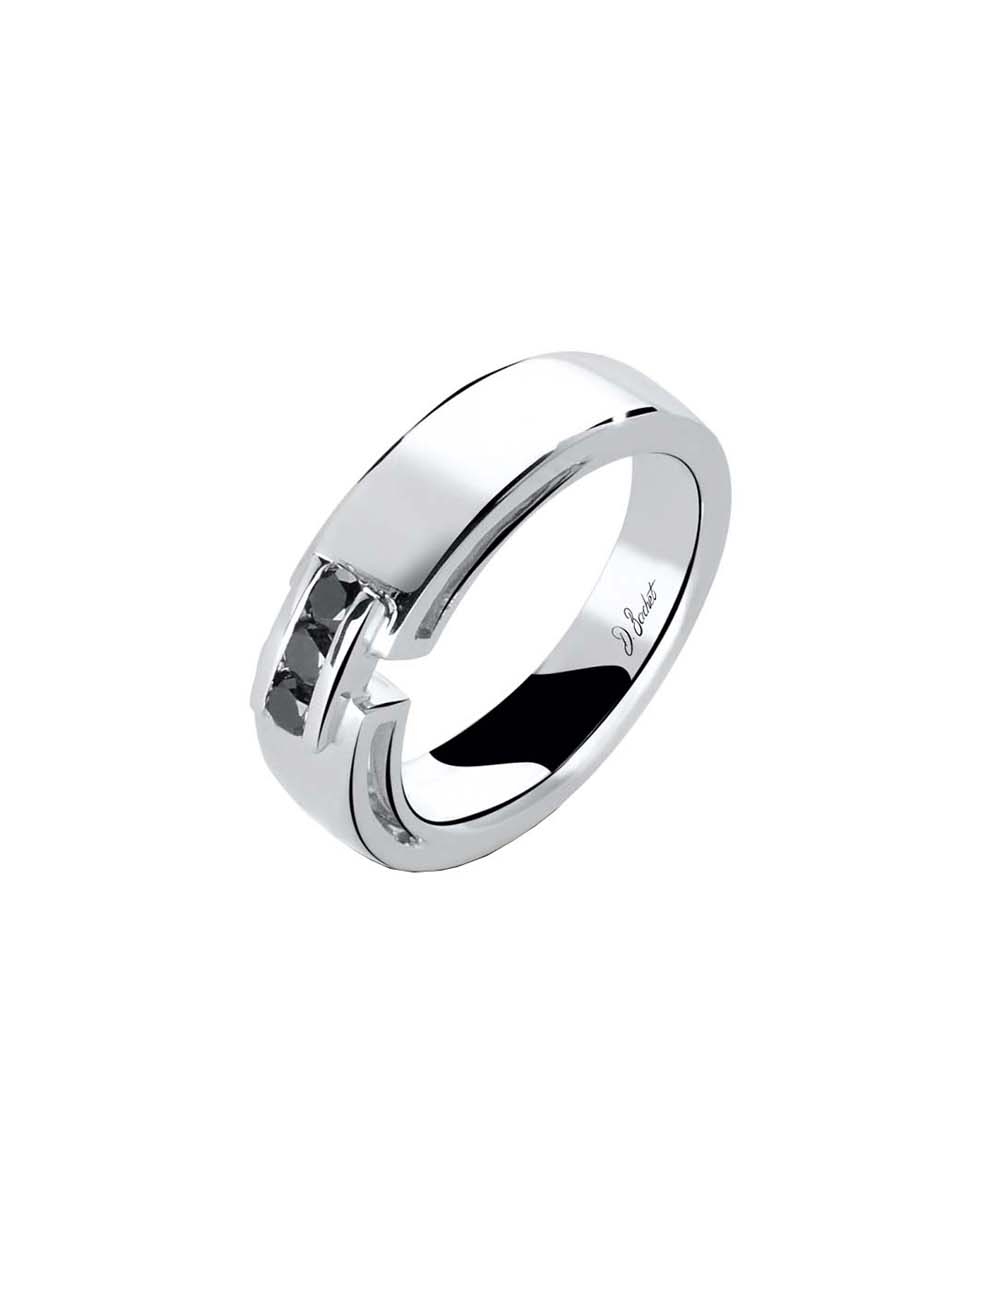 Men's ring in platinum set with 3 channel set black diamonds